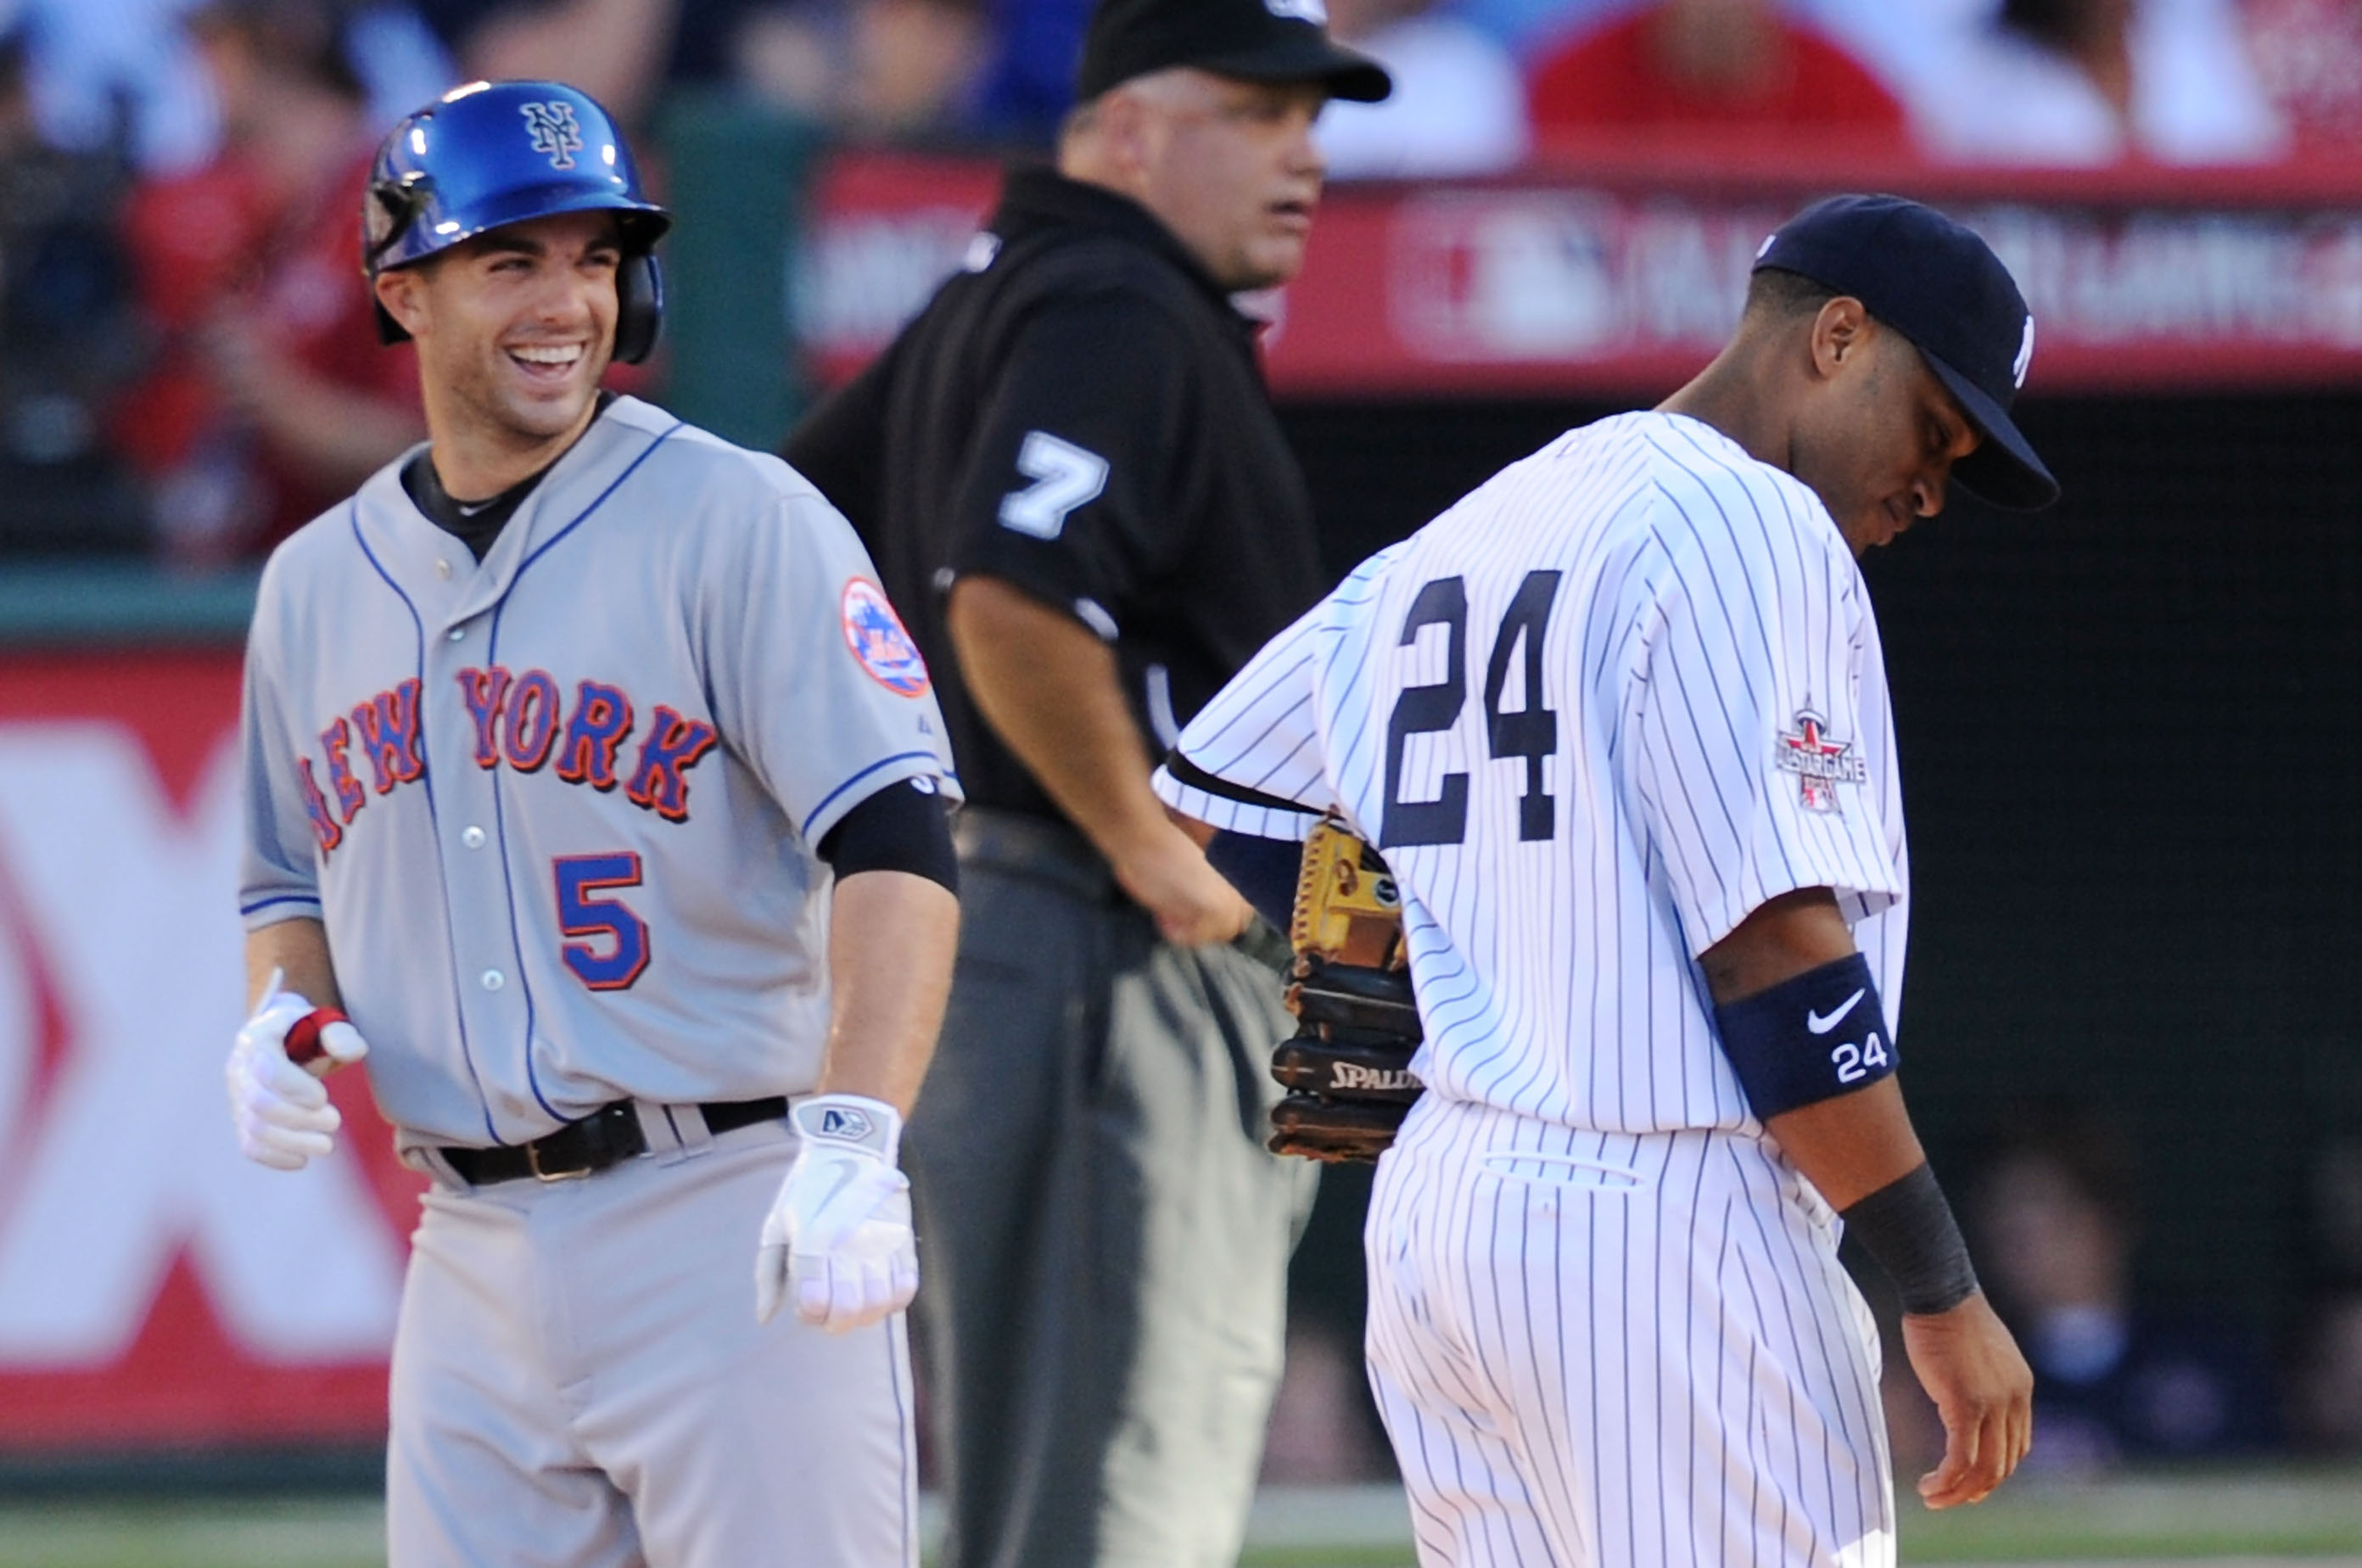 New York Mets: A Look at Johan Santana's Fall from Baseball Glory, News,  Scores, Highlights, Stats, and Rumors